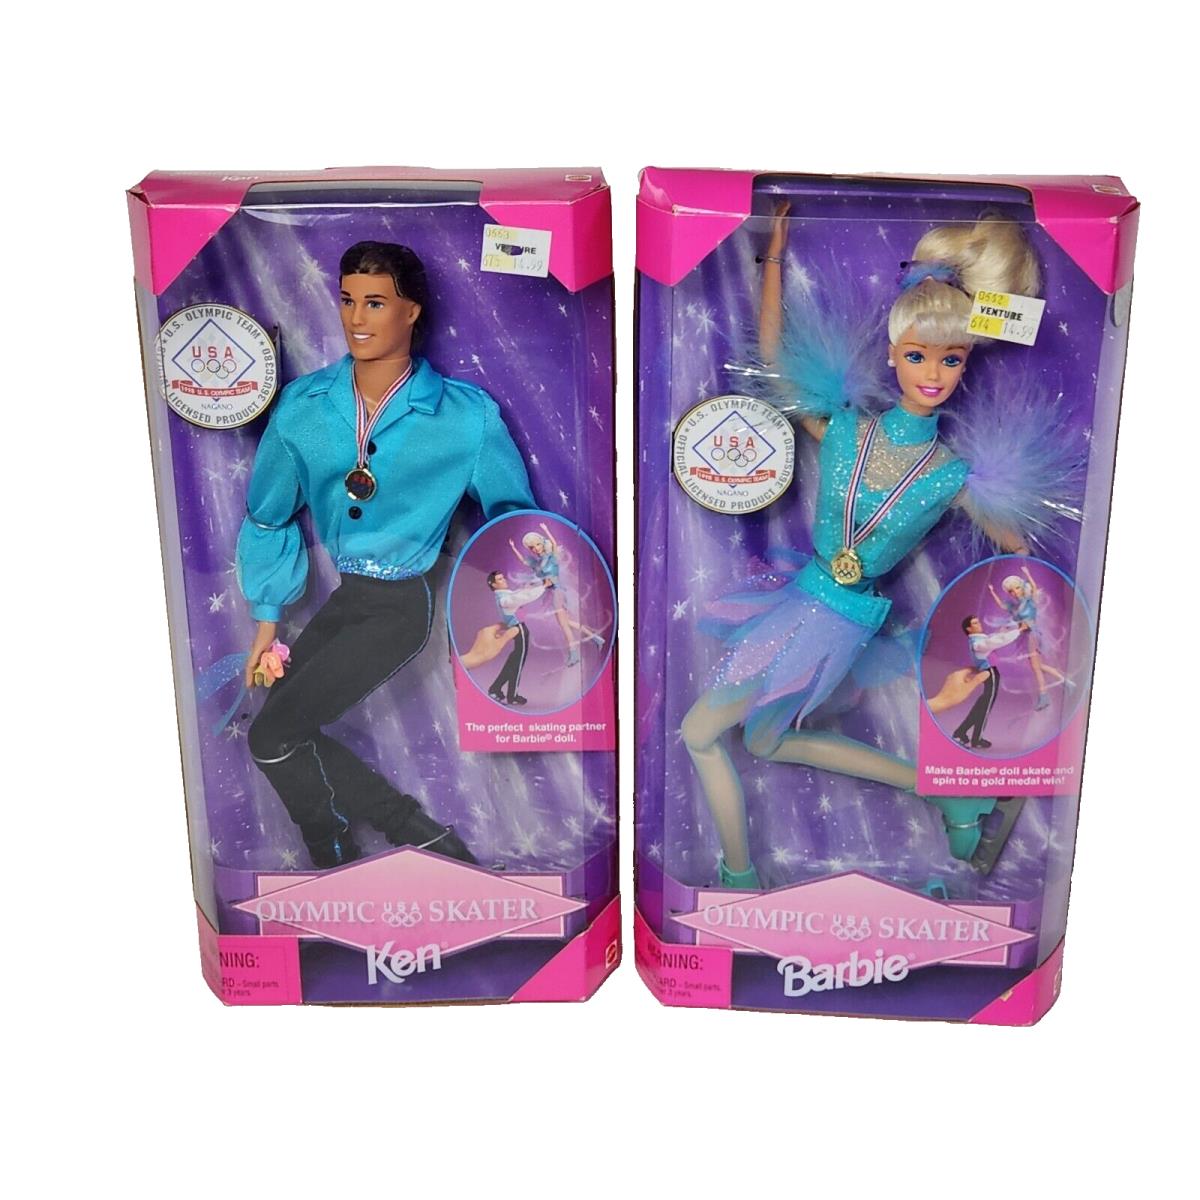 Vintage 1997 Olympic Skater Barbie Ken Doll IN Box 18501 + 18502